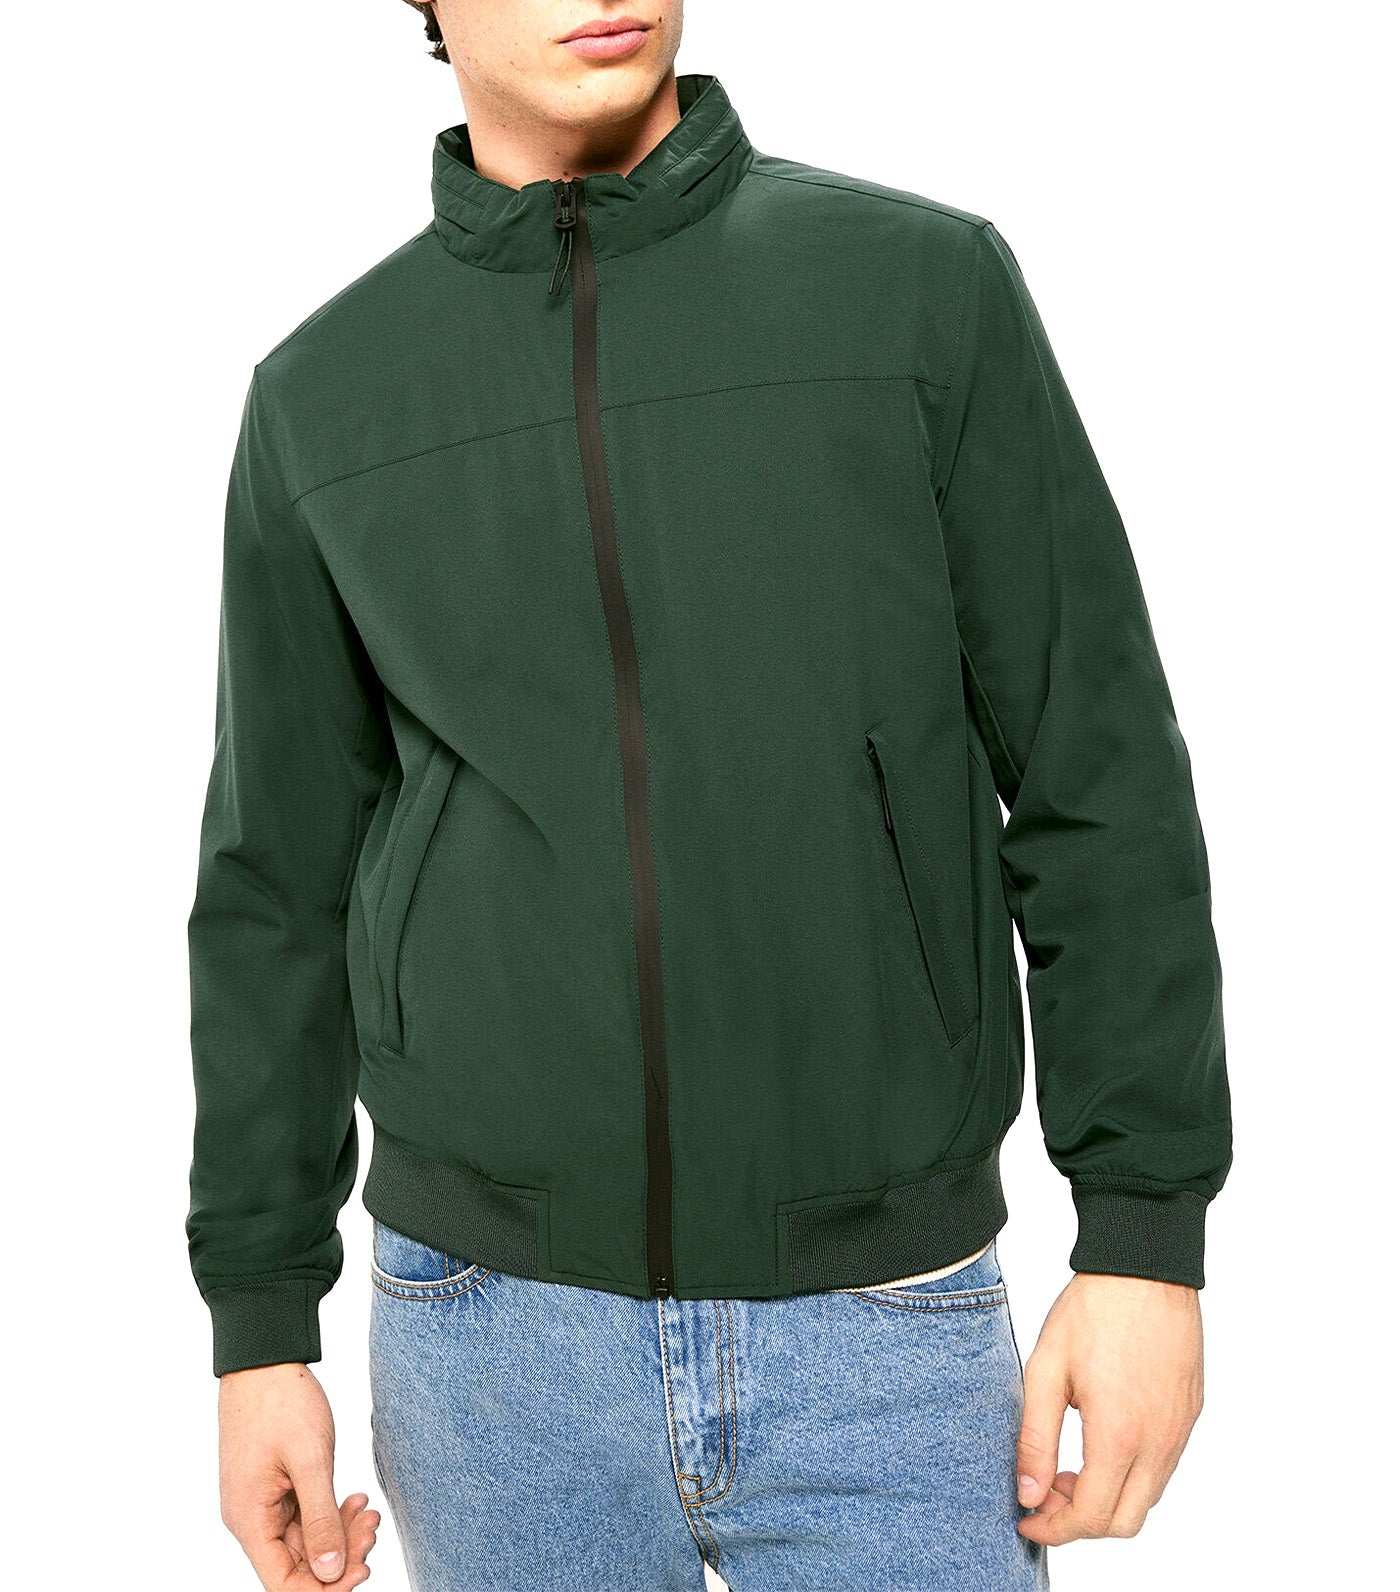 Technical Jacket Green